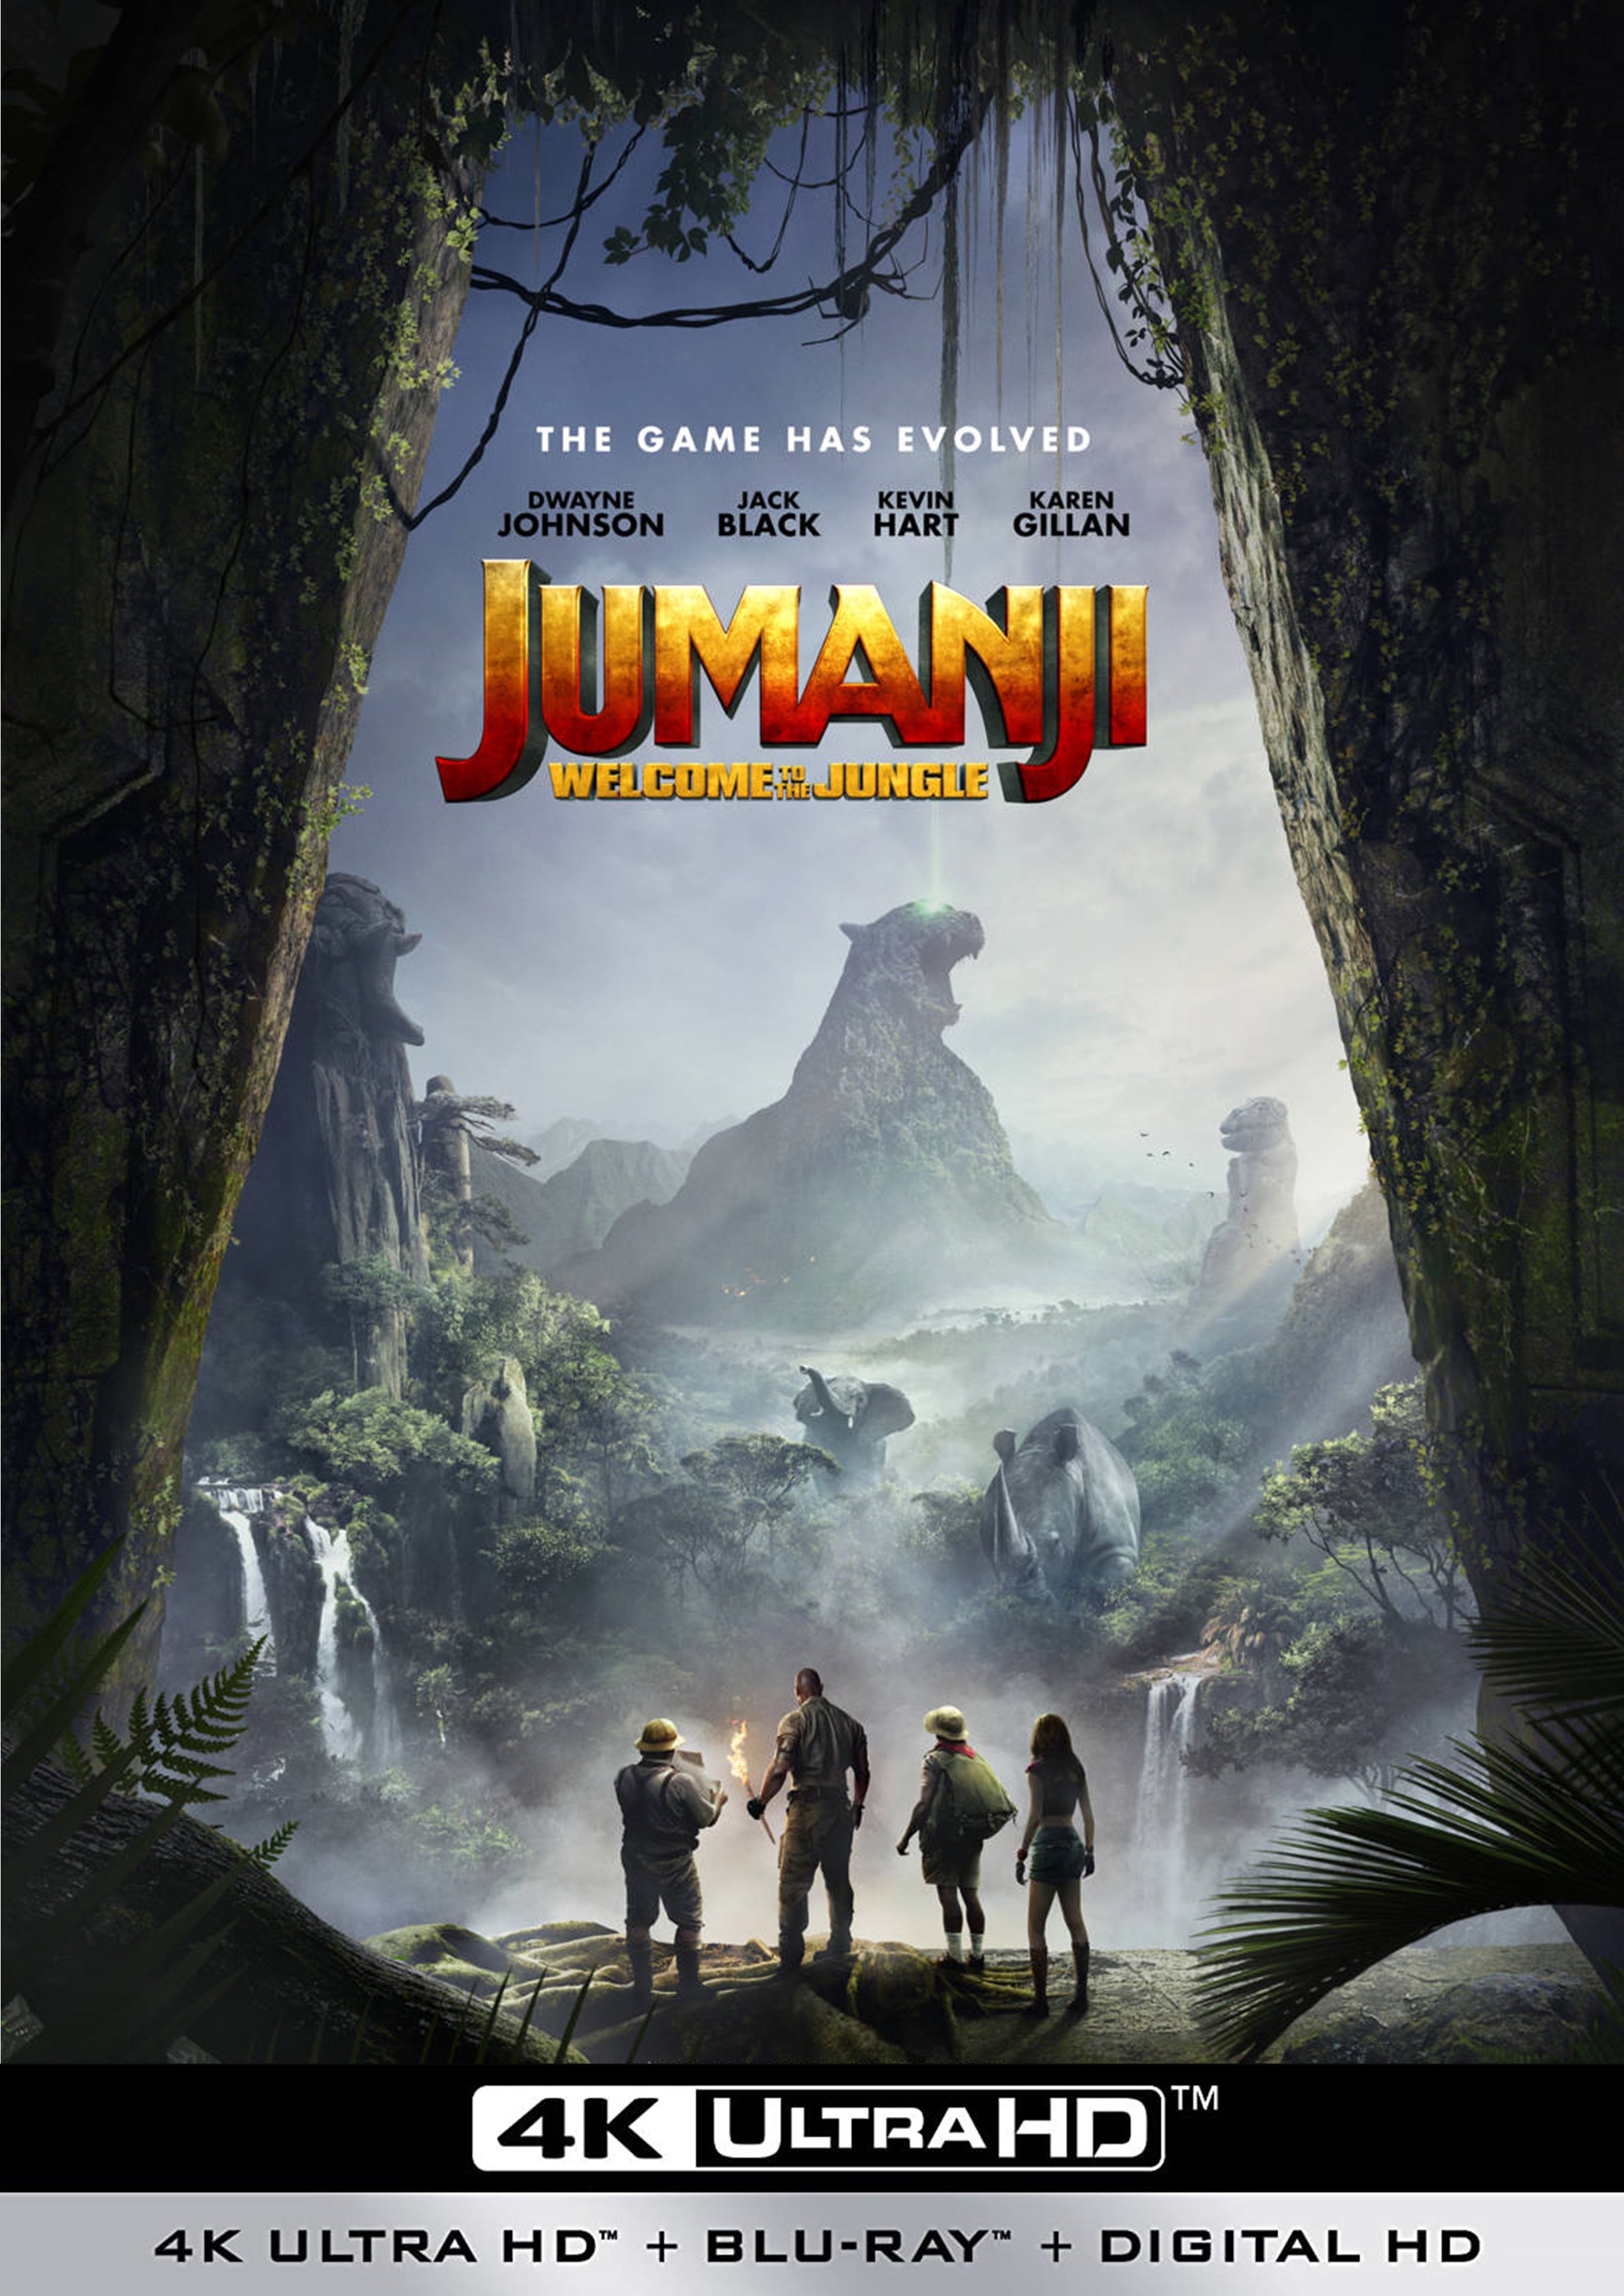 Stiahni si UHD Filmy Jumanji: Vitejte v jungli! / Jumanji: Welcome to the Jungle  (2017)(CZ/EN)(2160p 4K BRRip) = CSFD 72%